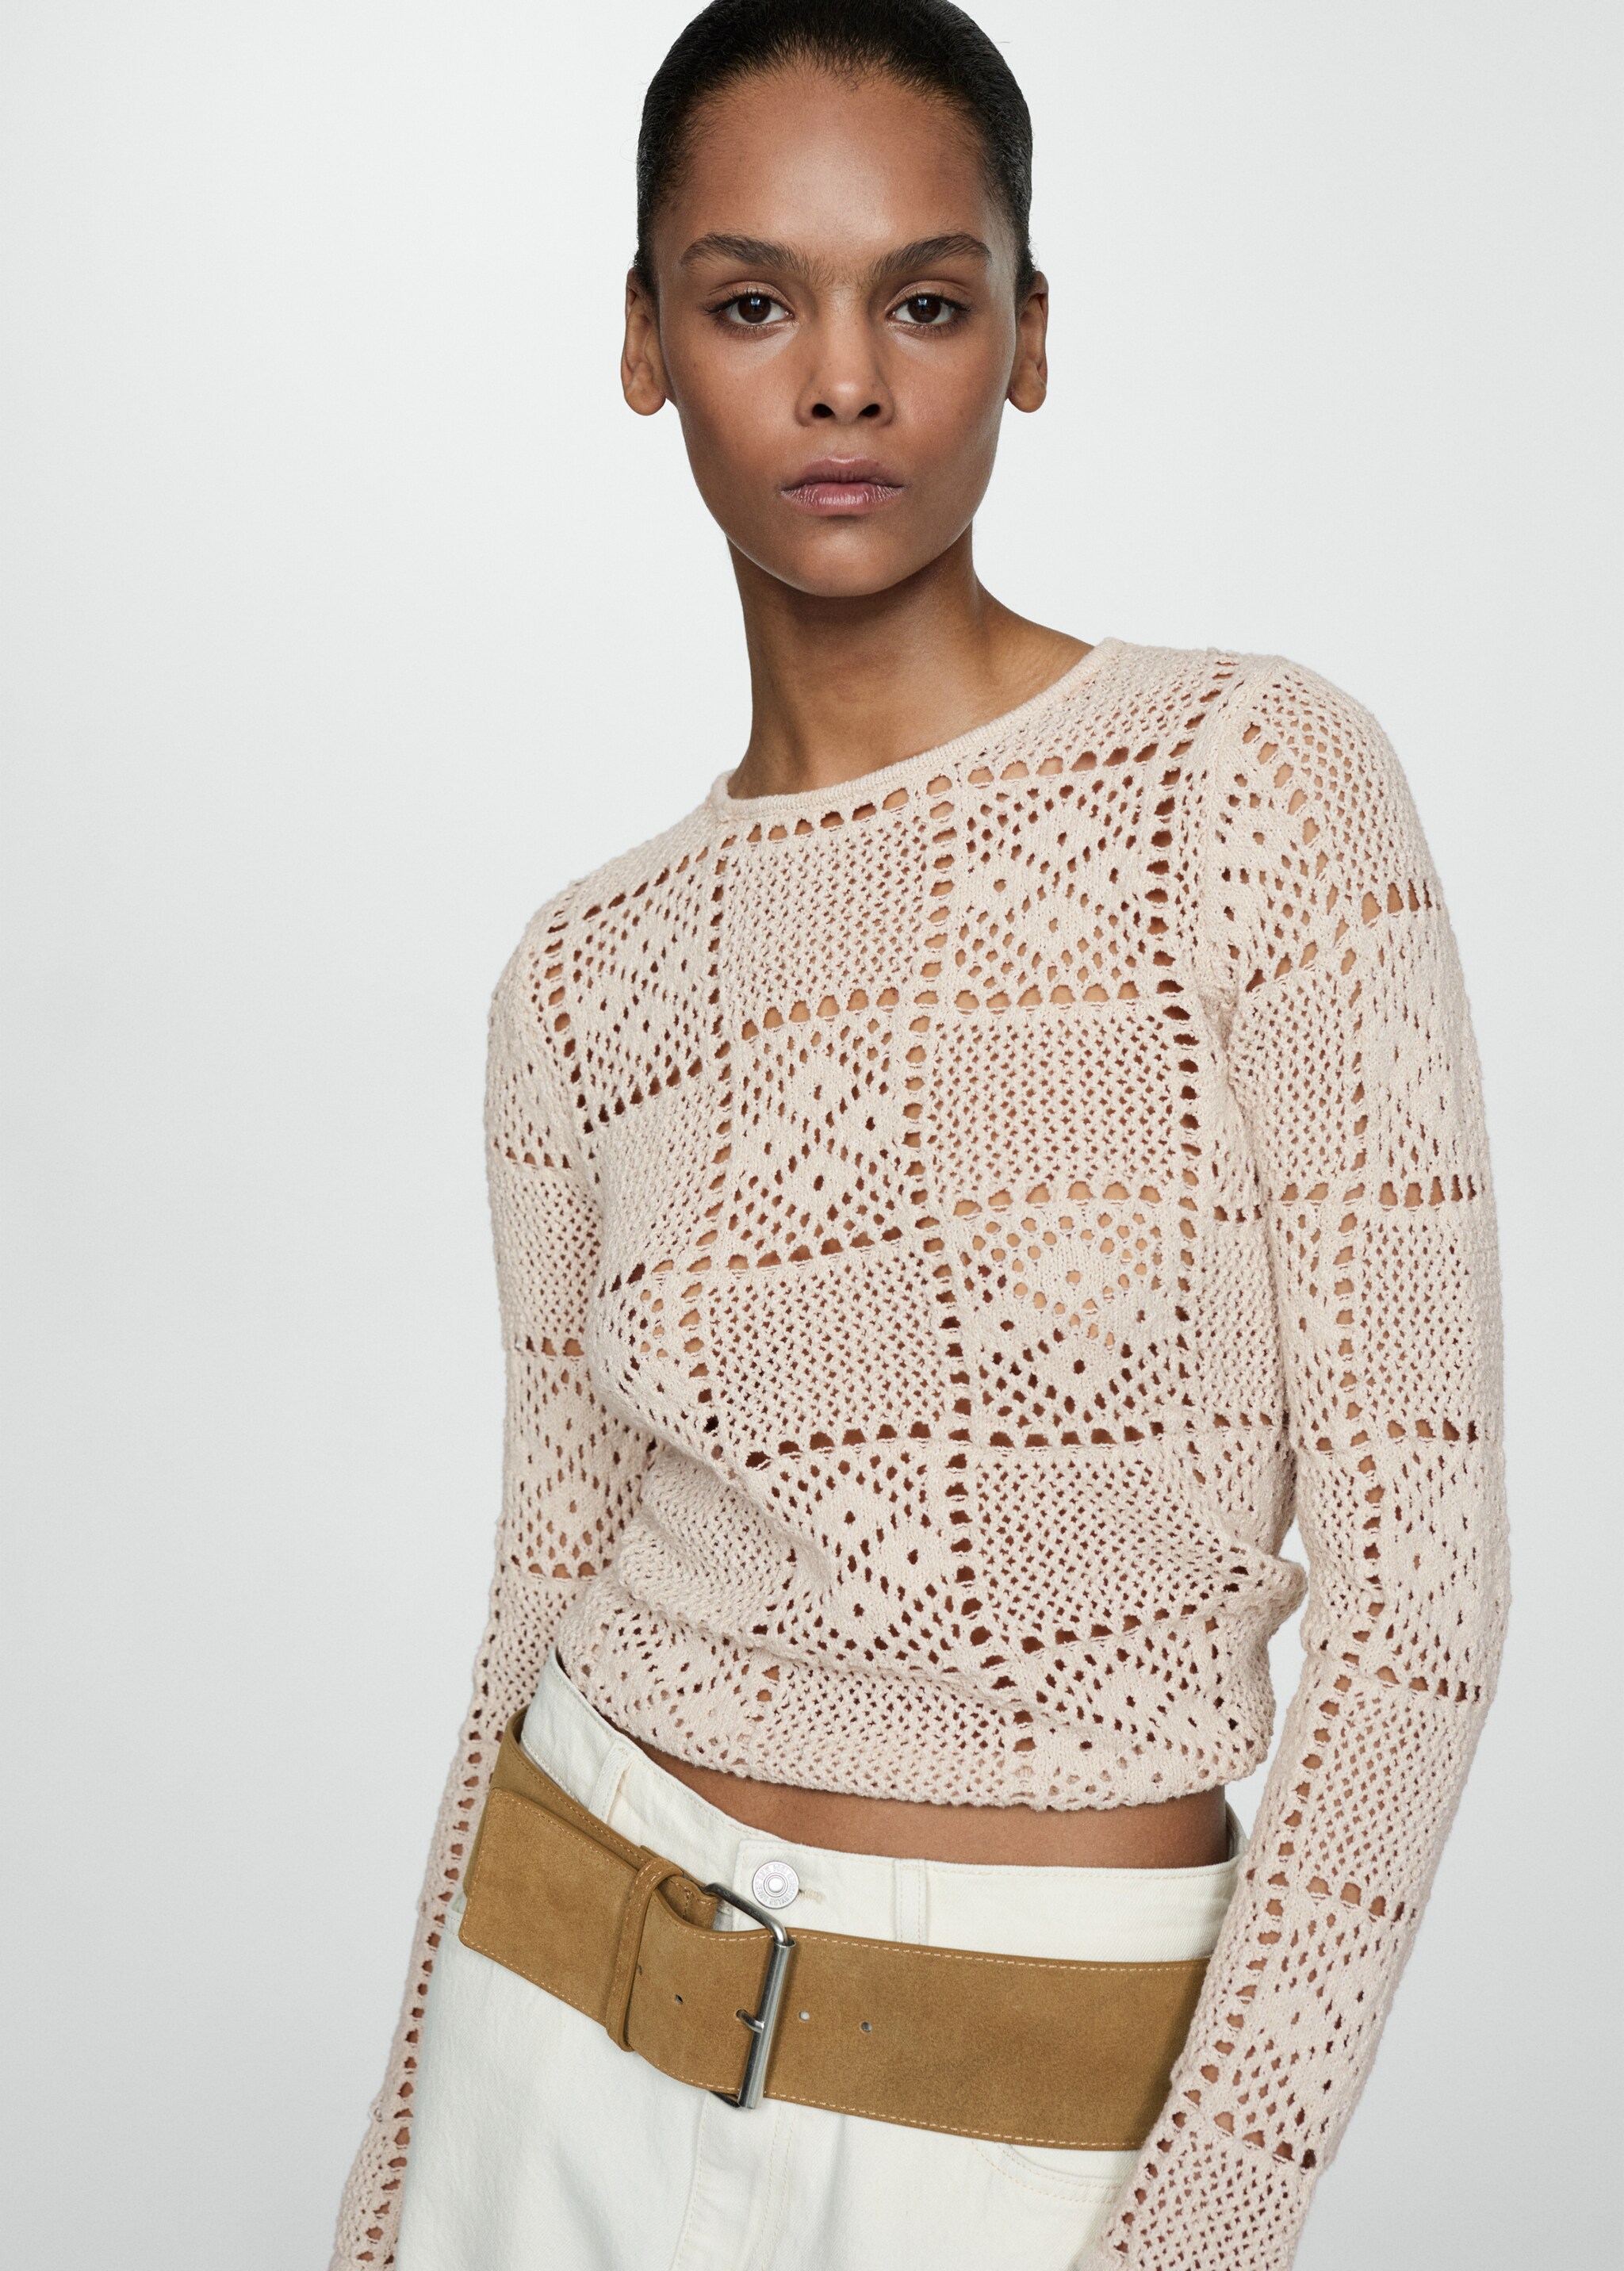 Crochet sweater with openwork details - Medium plane